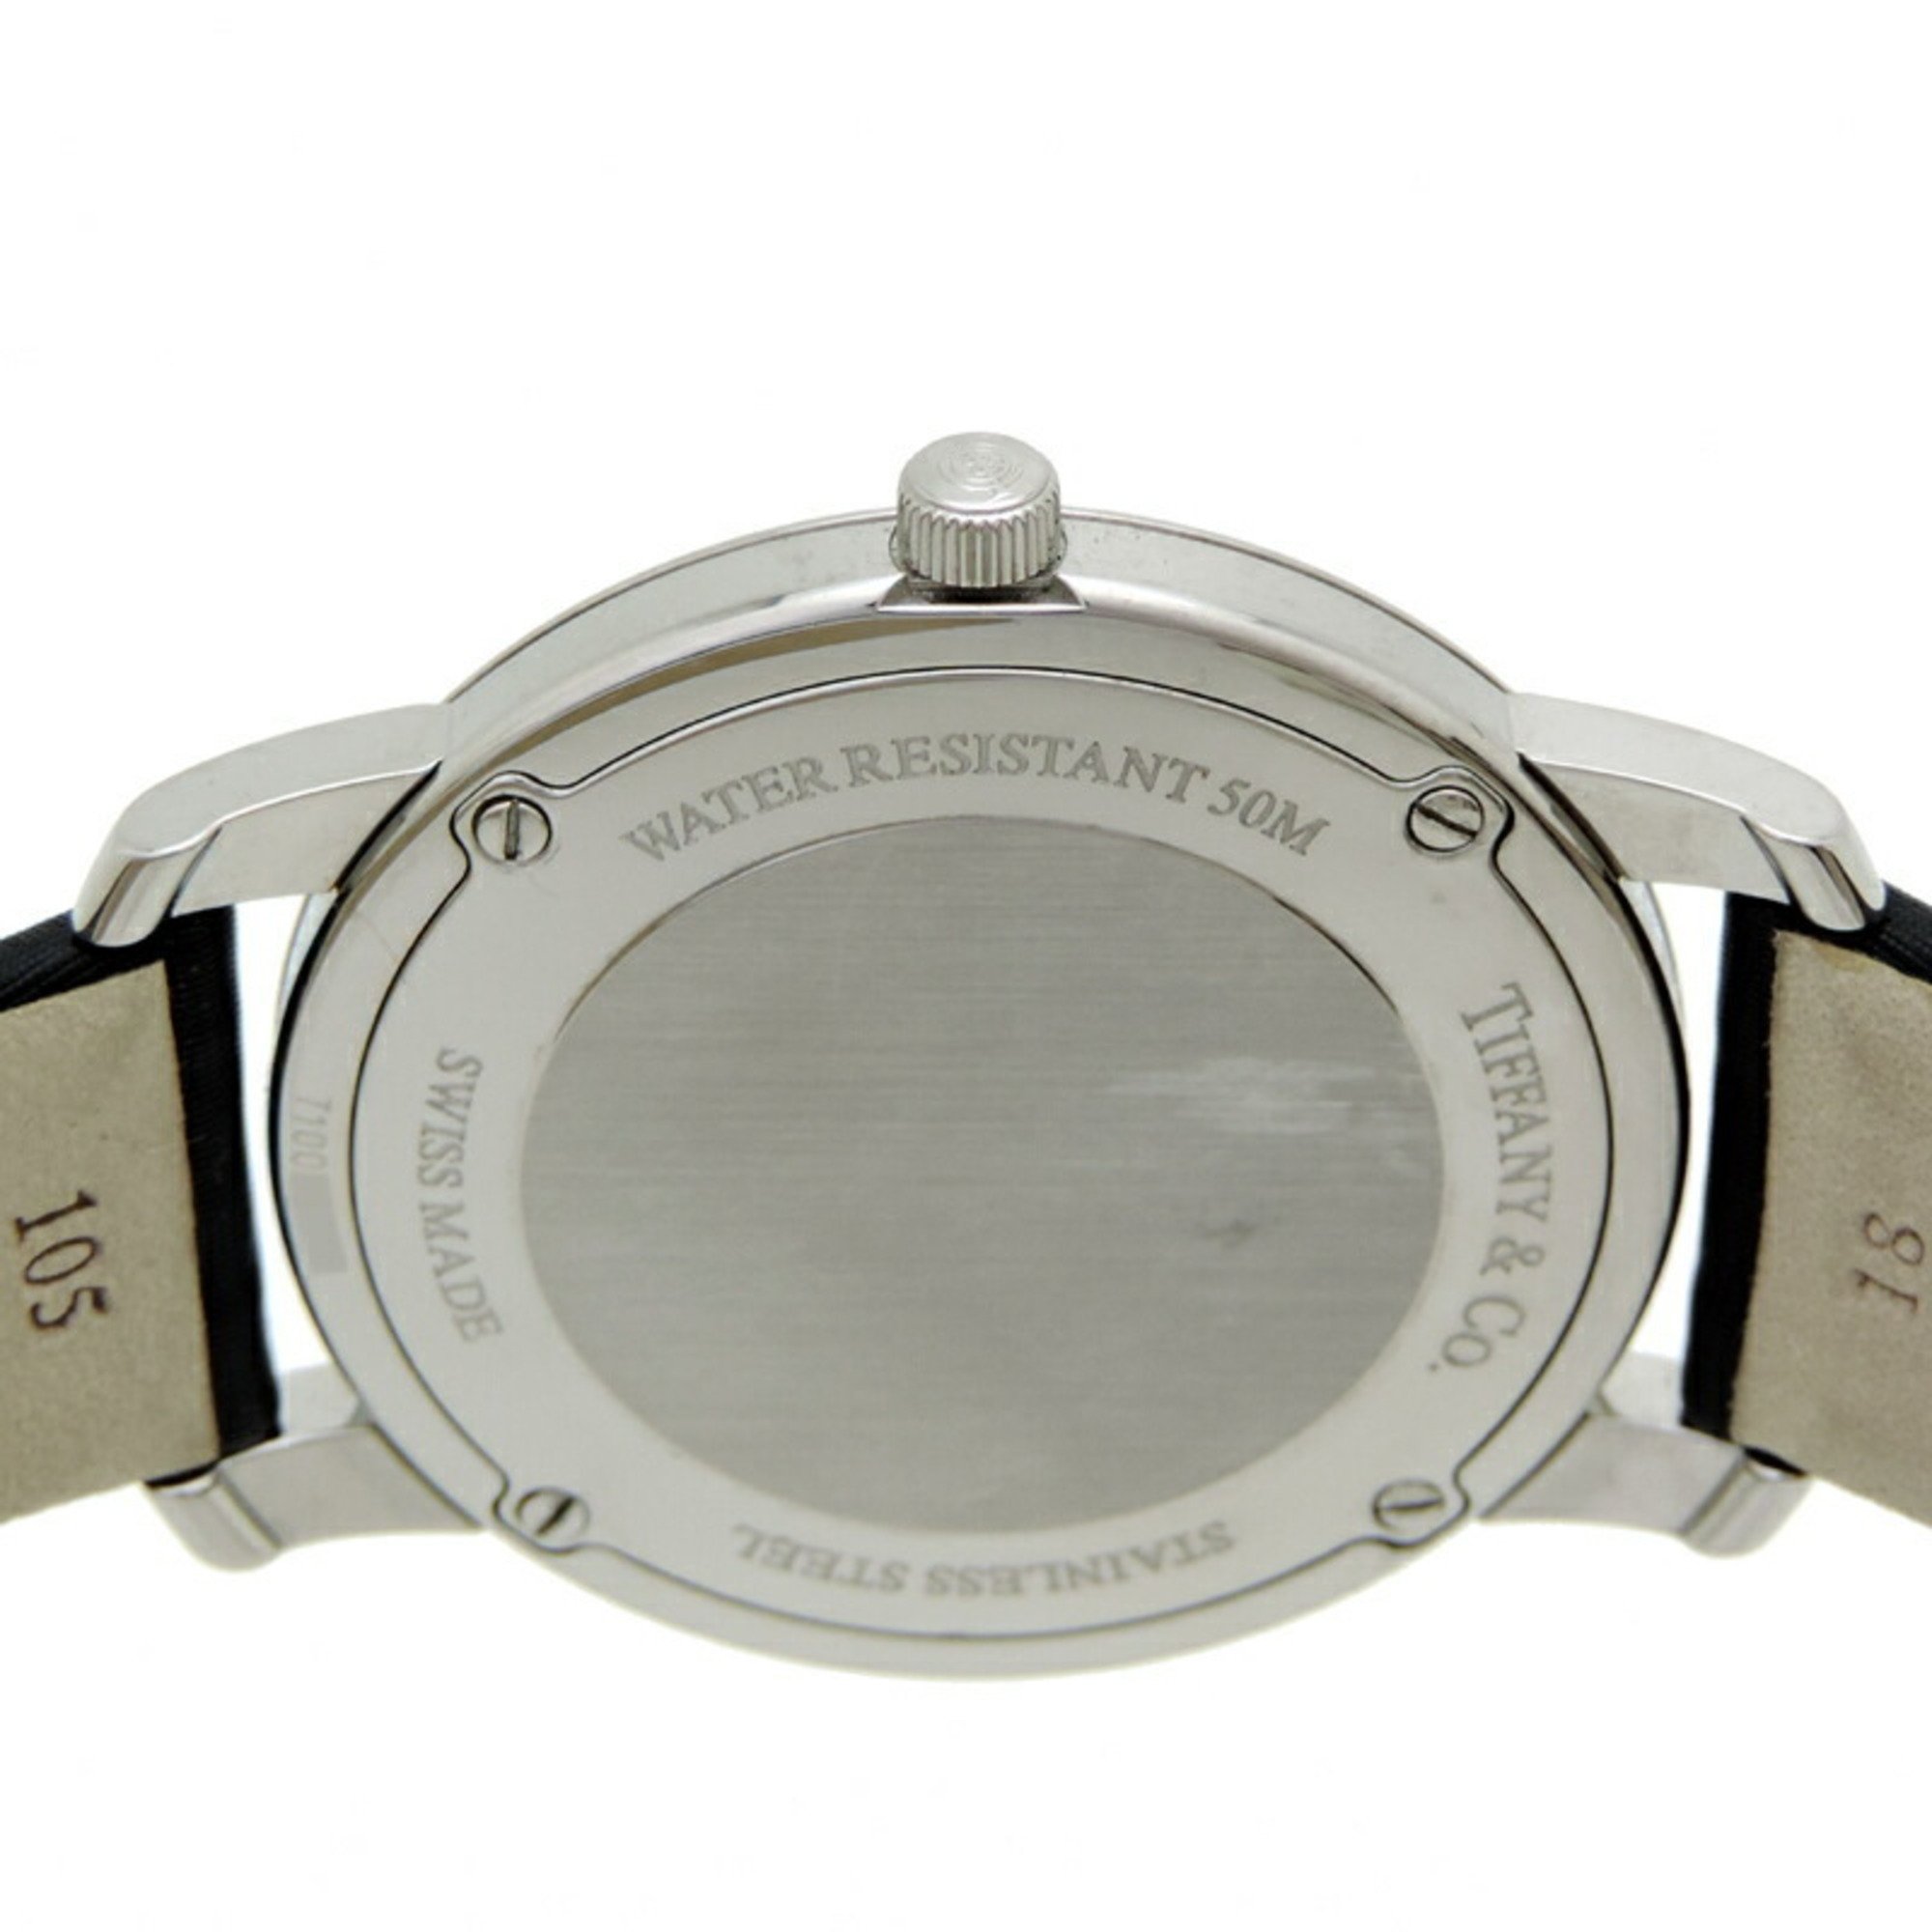 Tiffany Mark Round Men's Watch Z0046.17.10A900A